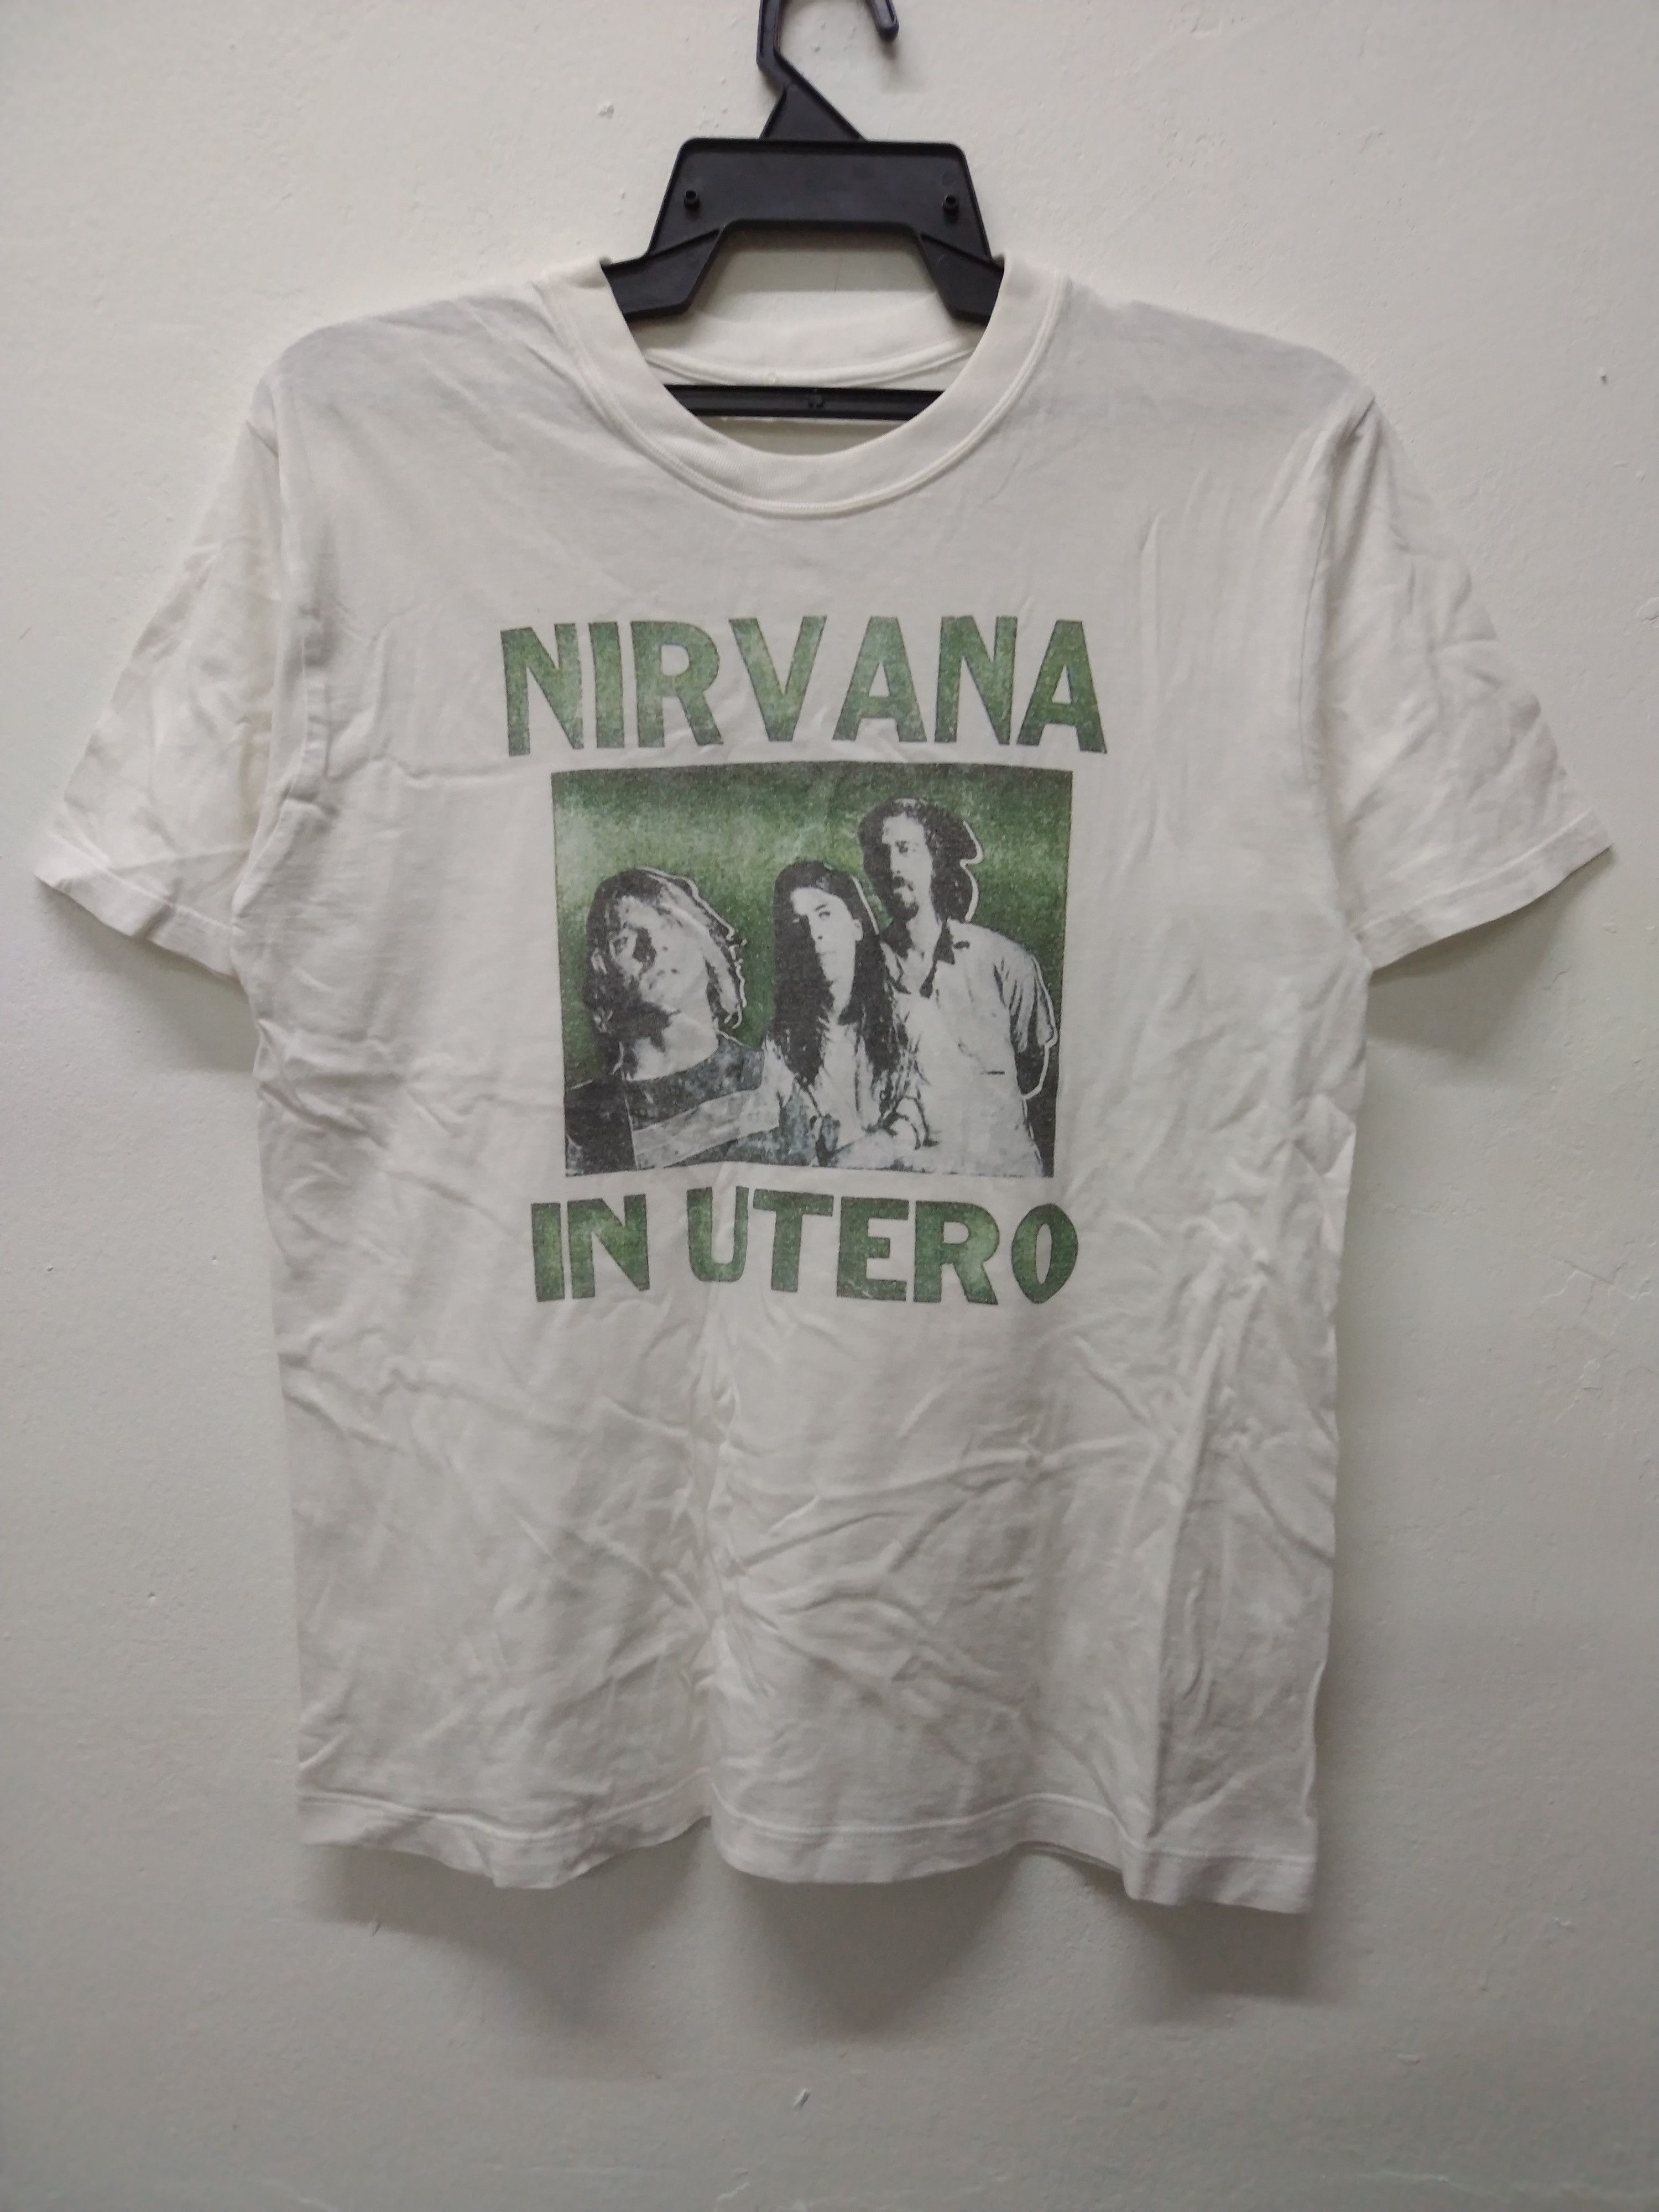 Nirvana 1993 NIRVANA IN UTERO TSHIRT BAND SOFT COTTON Size US S / EU 44-46 / 1 - 1 Preview